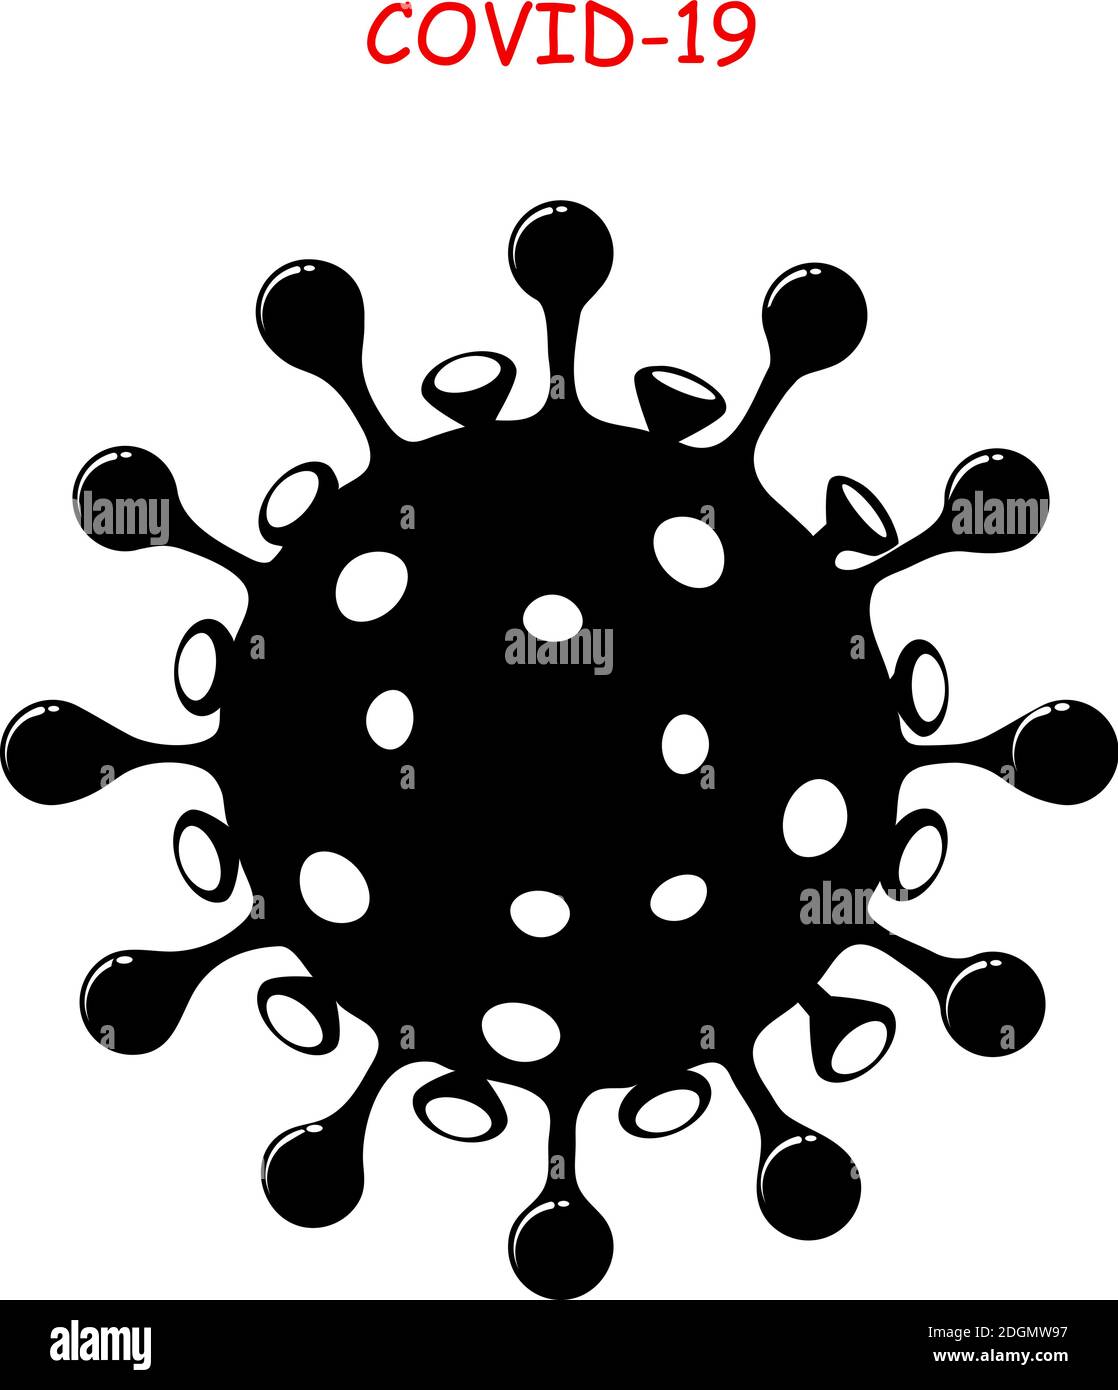 virus corona icon COVID-19. Coronavirus black symbol on white background. Isolated vector illustration. influenza or pneumonia pandemic. virion Stock Vector